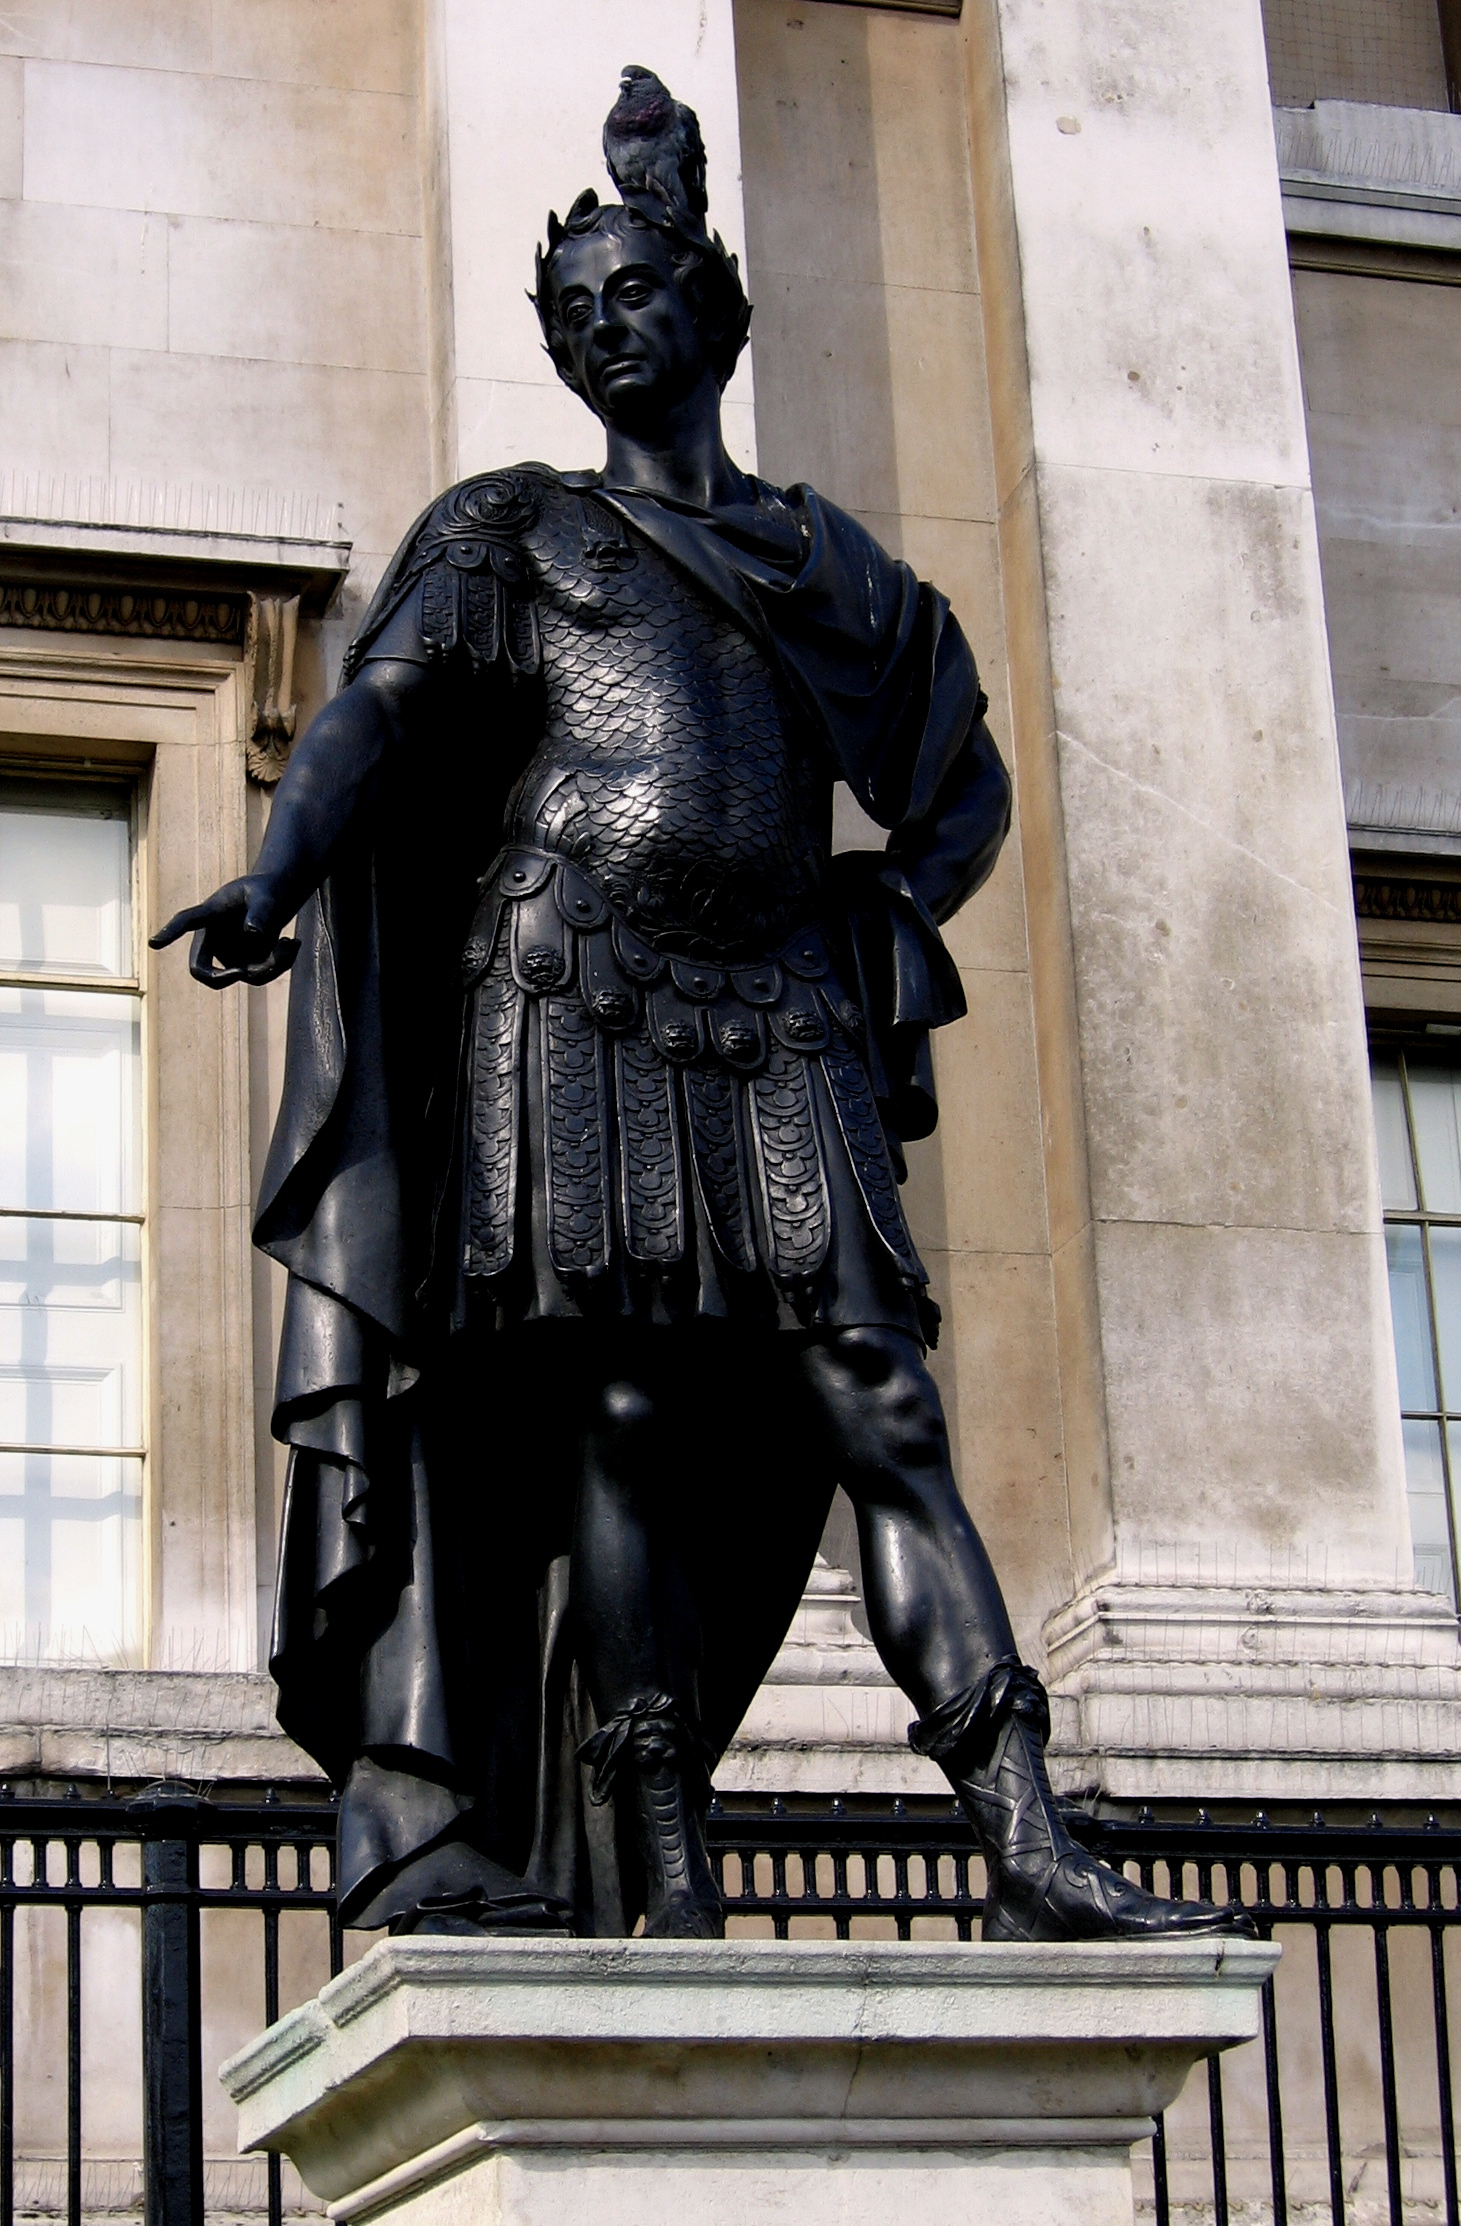 2005-09-18 - United Kingdom - England - London - Trafalgar Square - National Gallery - Pigeon - Misc 4887706005